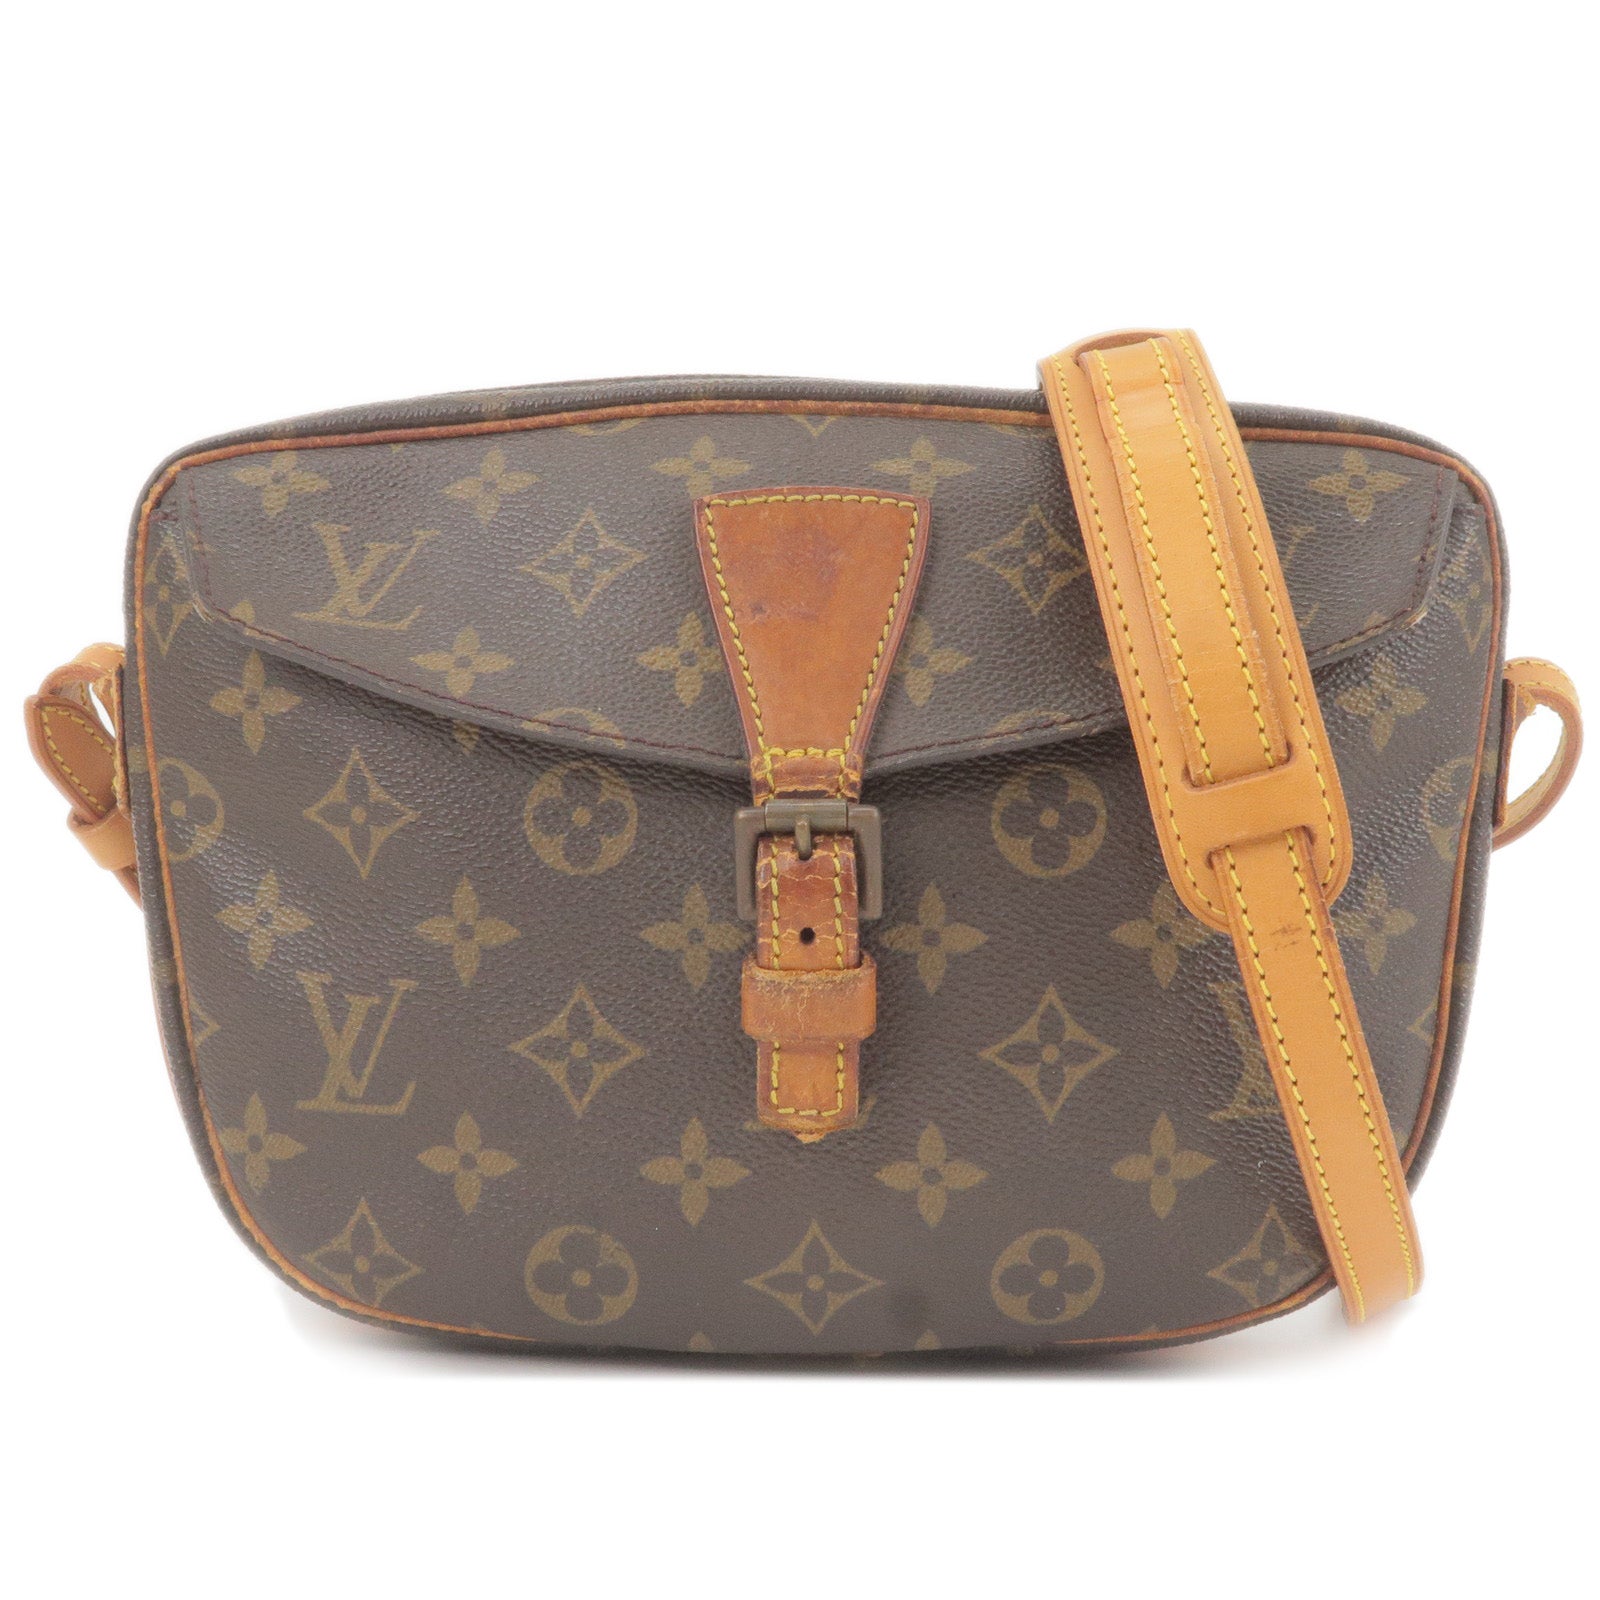 Louis Vuitton - Alma mm - Monogram - Brown - Women - Handbag - Luxury